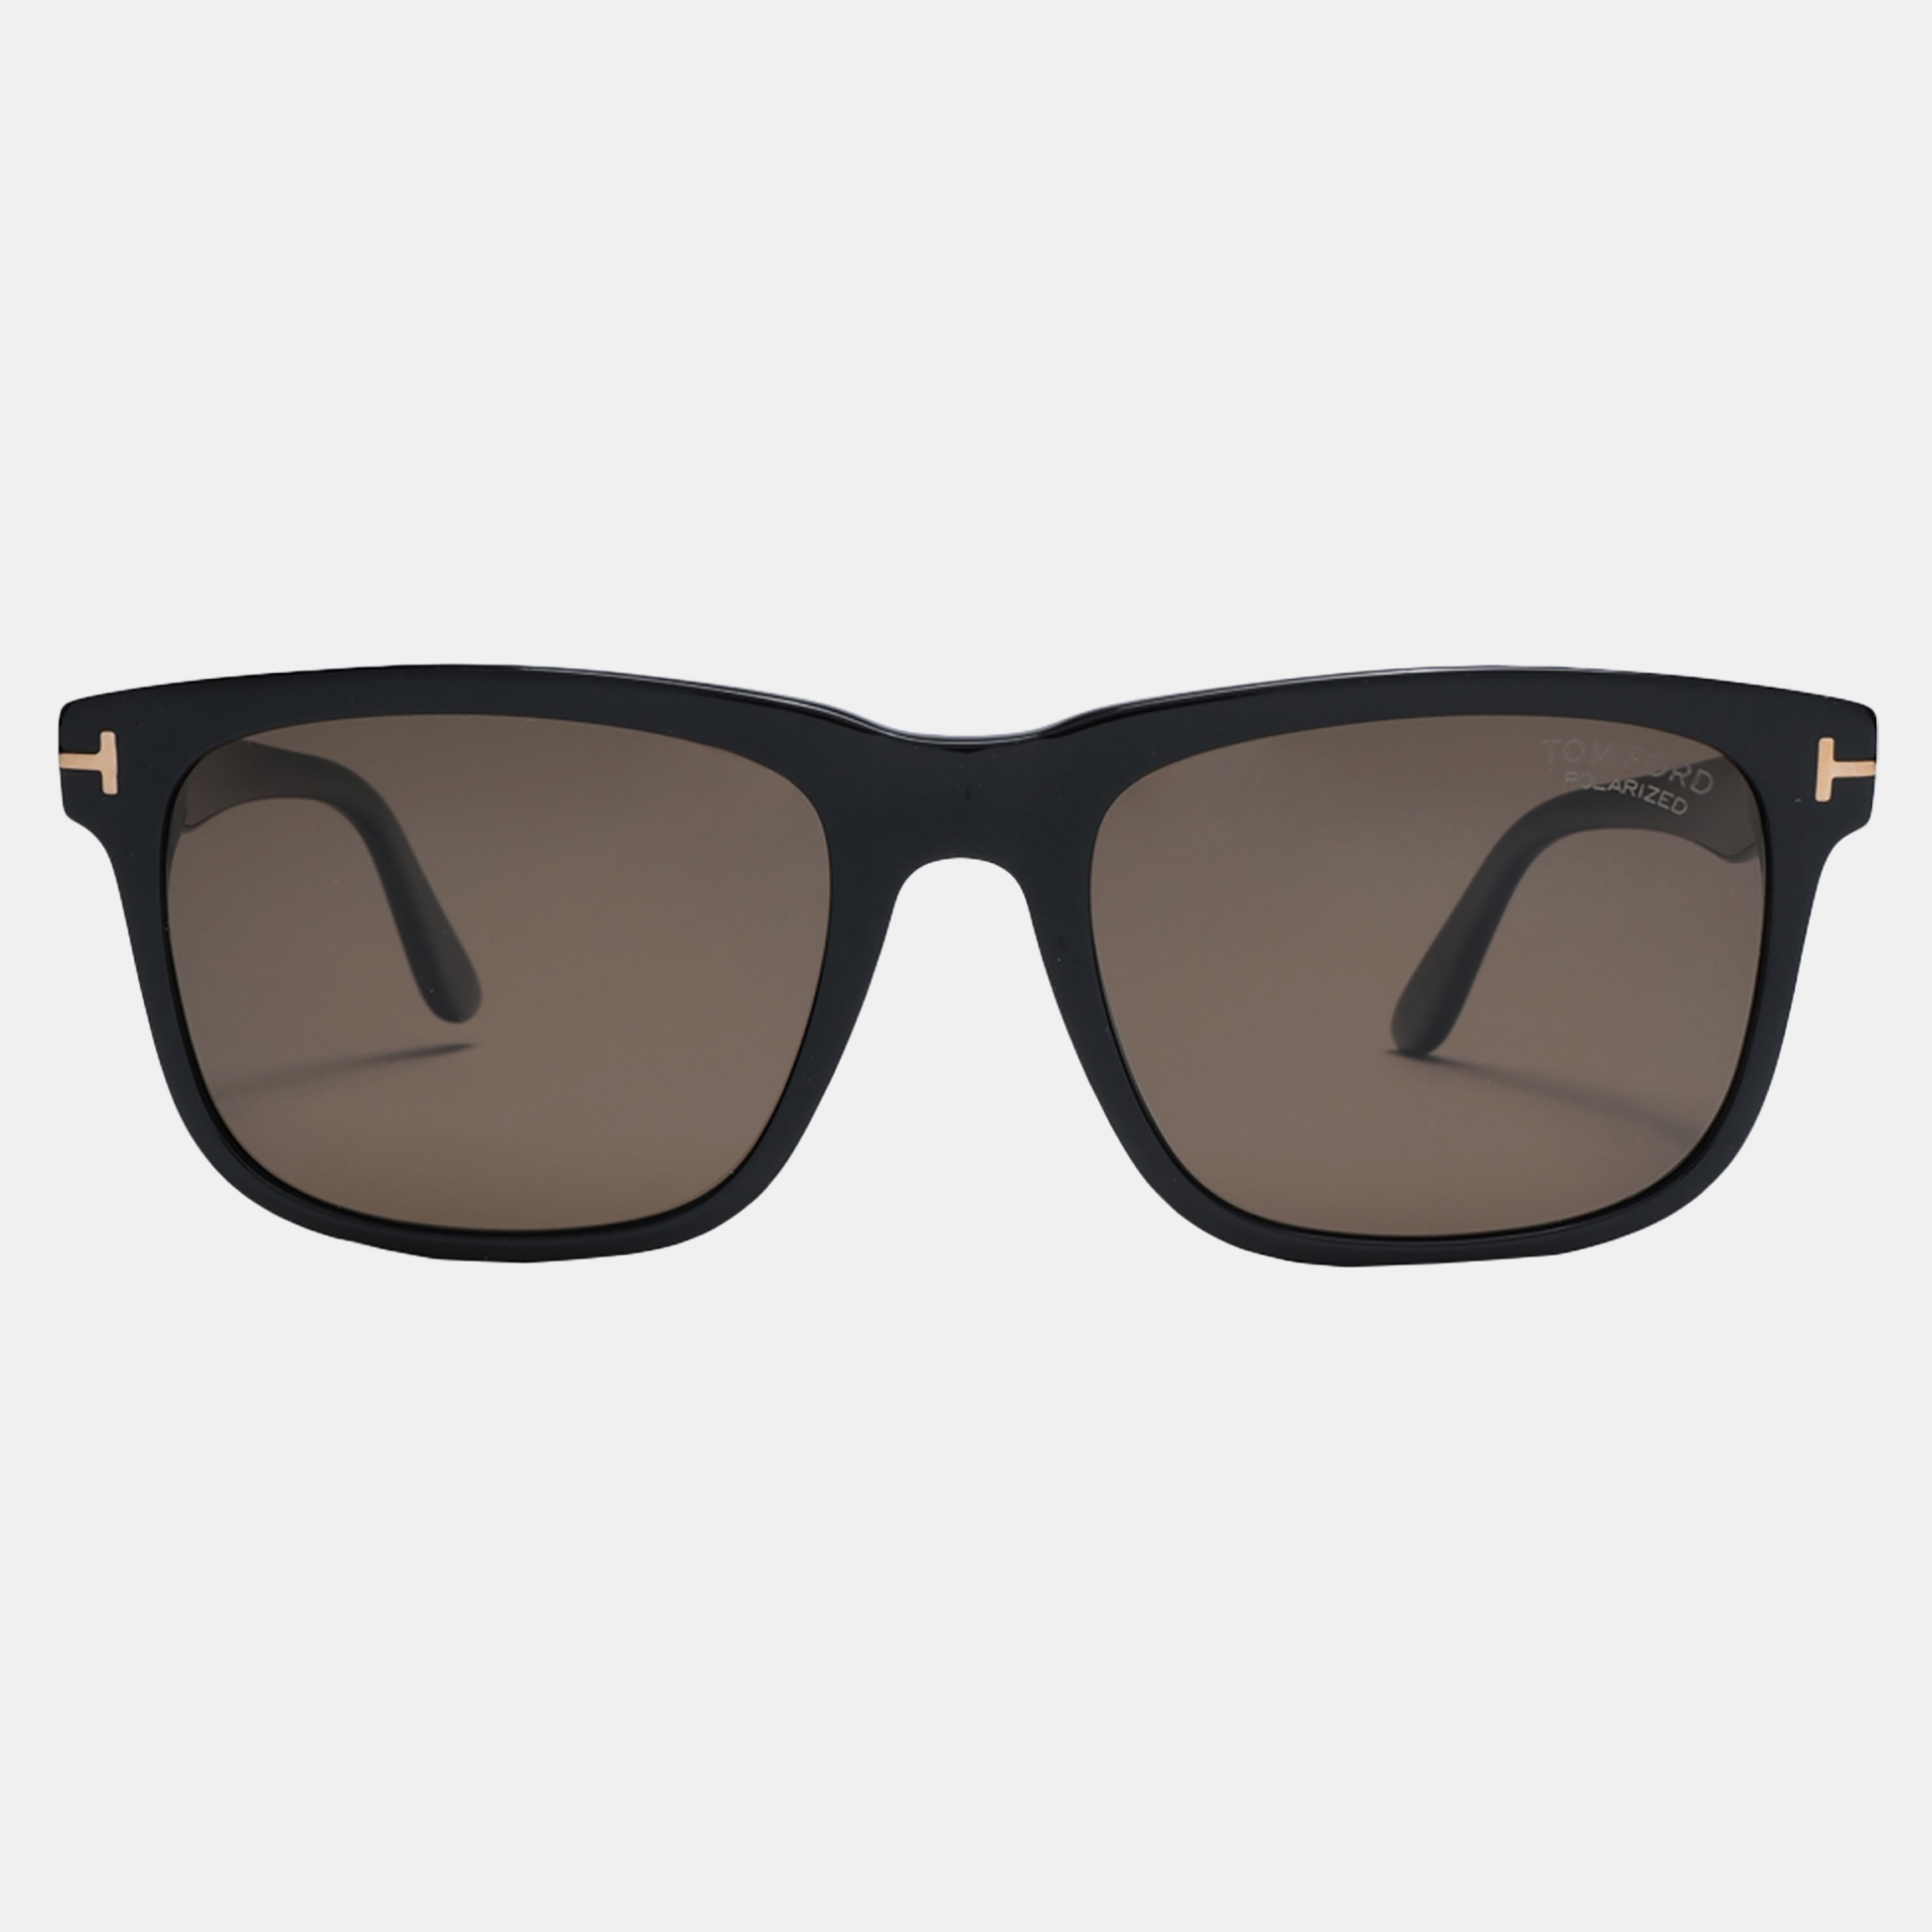 

Tom Ford Sunglasses 56, Black